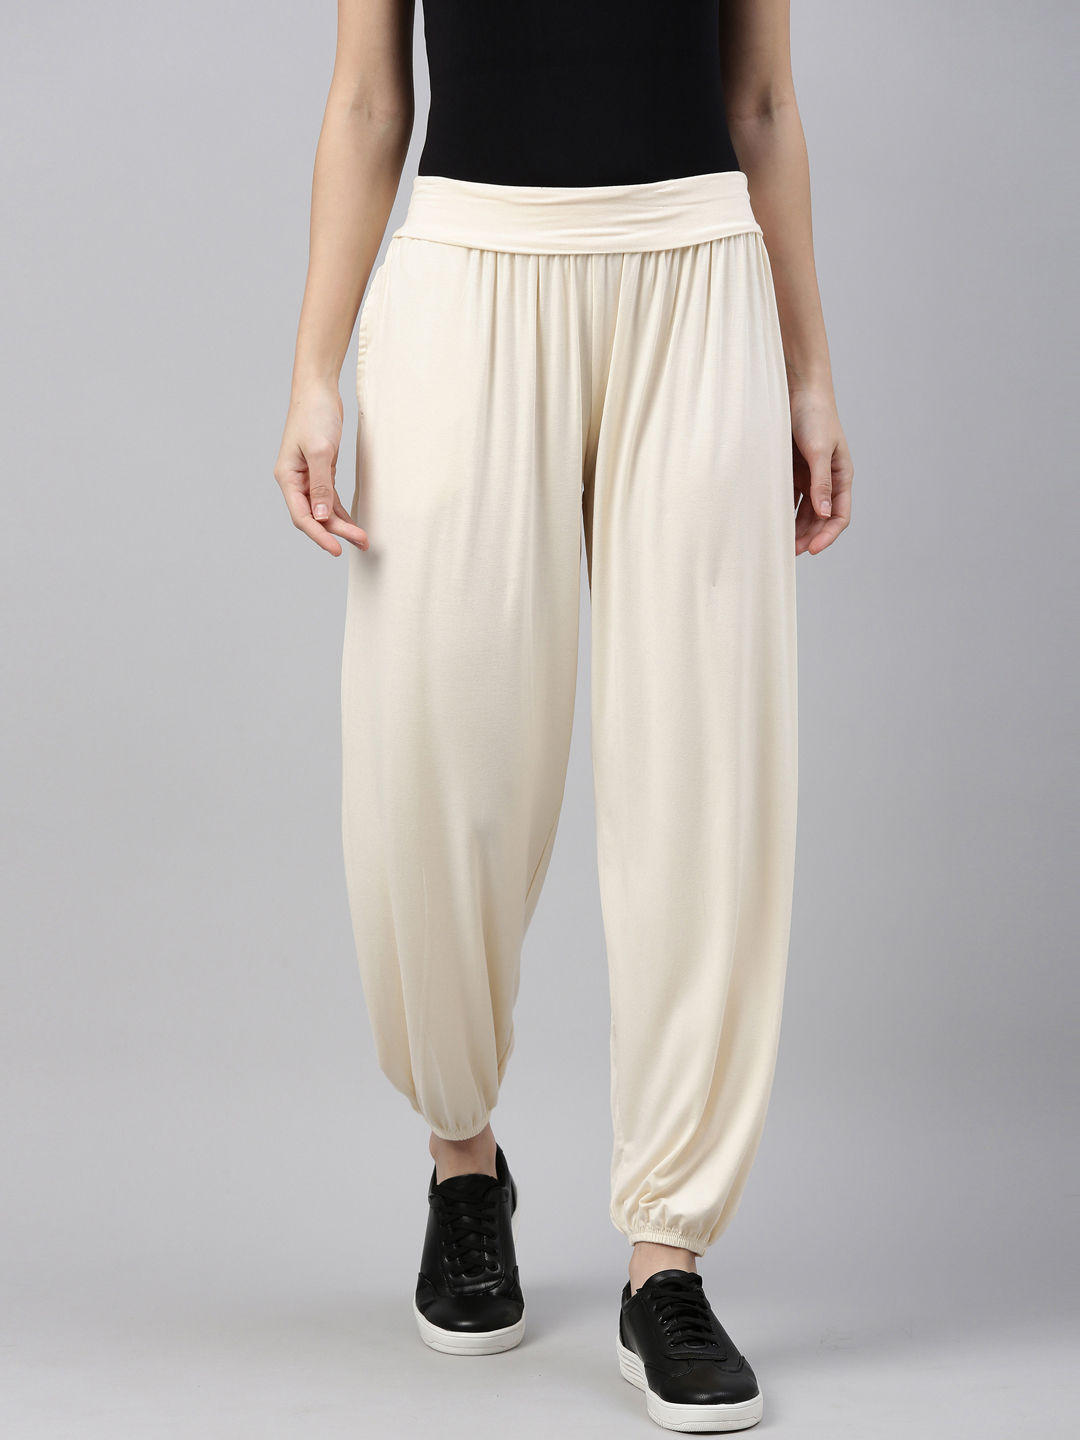 Buy The Standard Harem Yoga Cotton Pyjama Pants for Men  Women  Multicolour  Free Size SKU01023 Grey at Amazonin